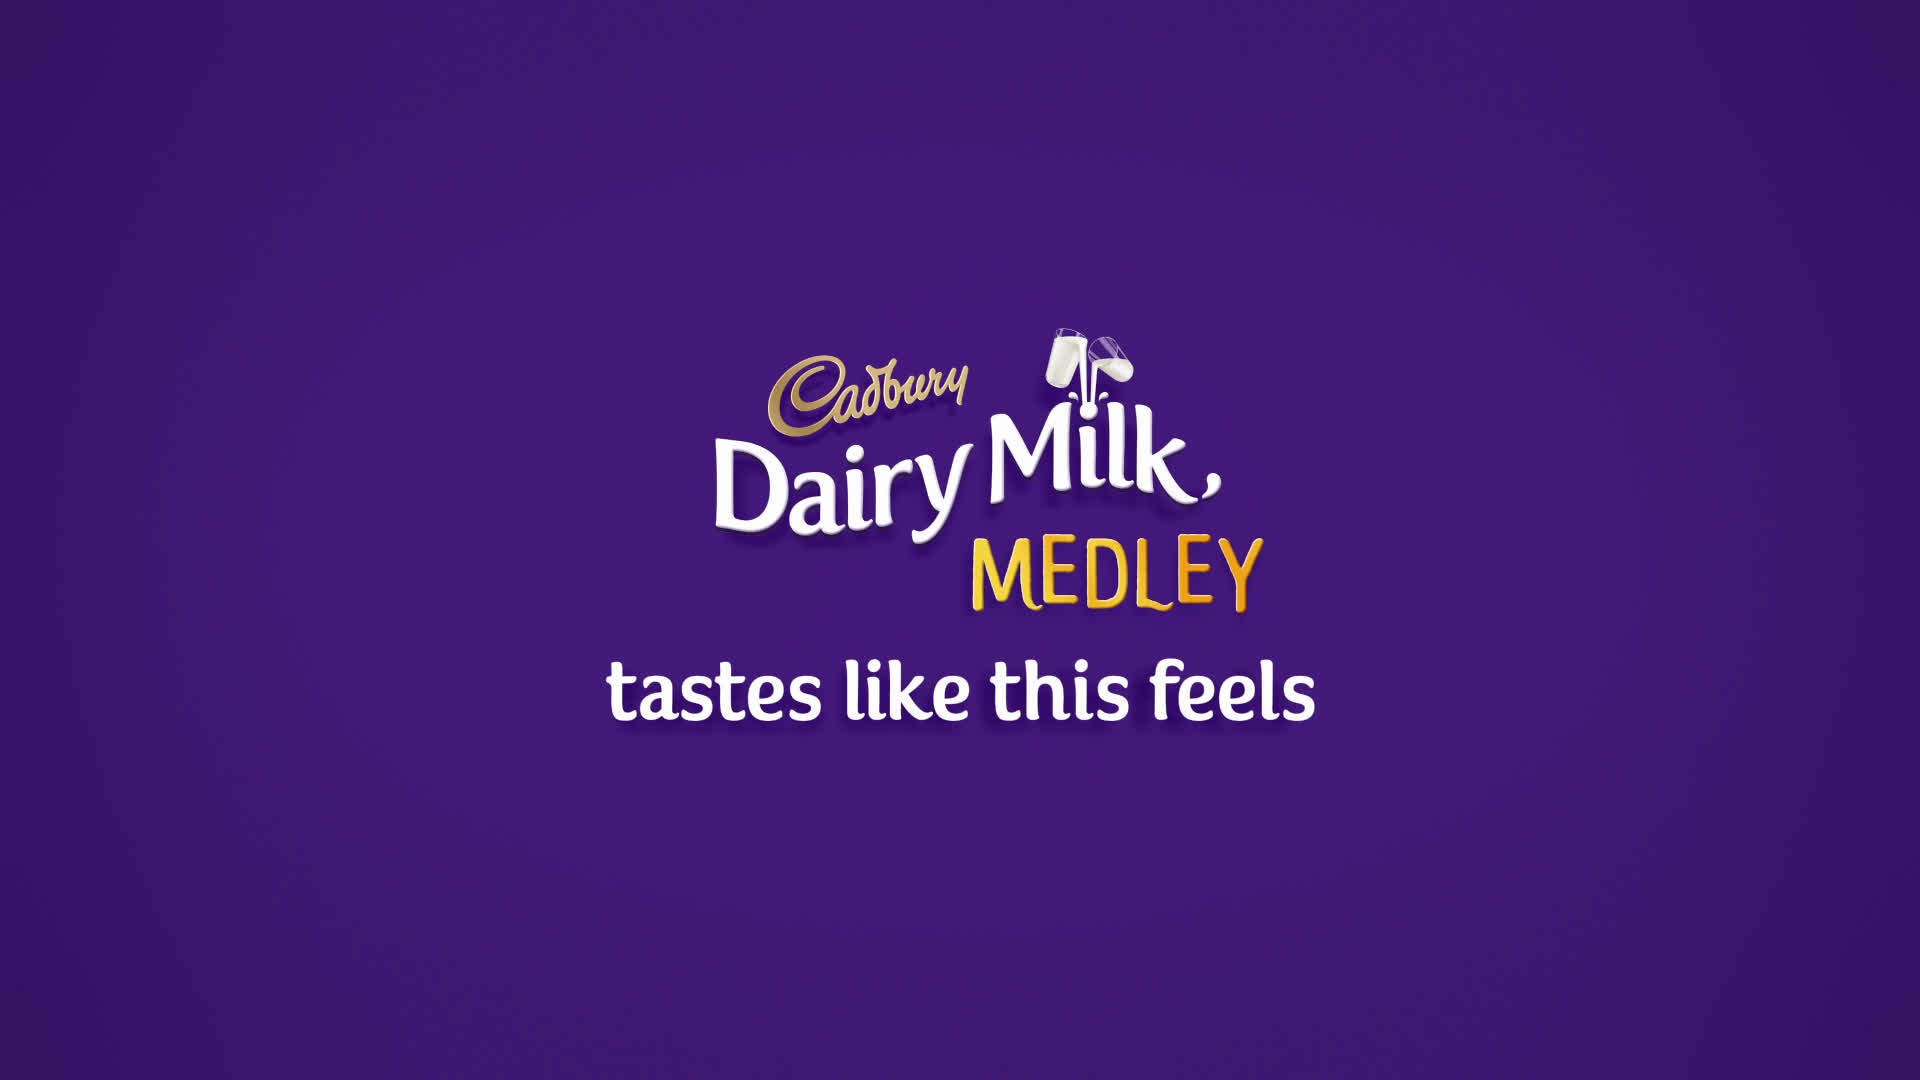 Cadbury Dairy Milk tastes like this feels